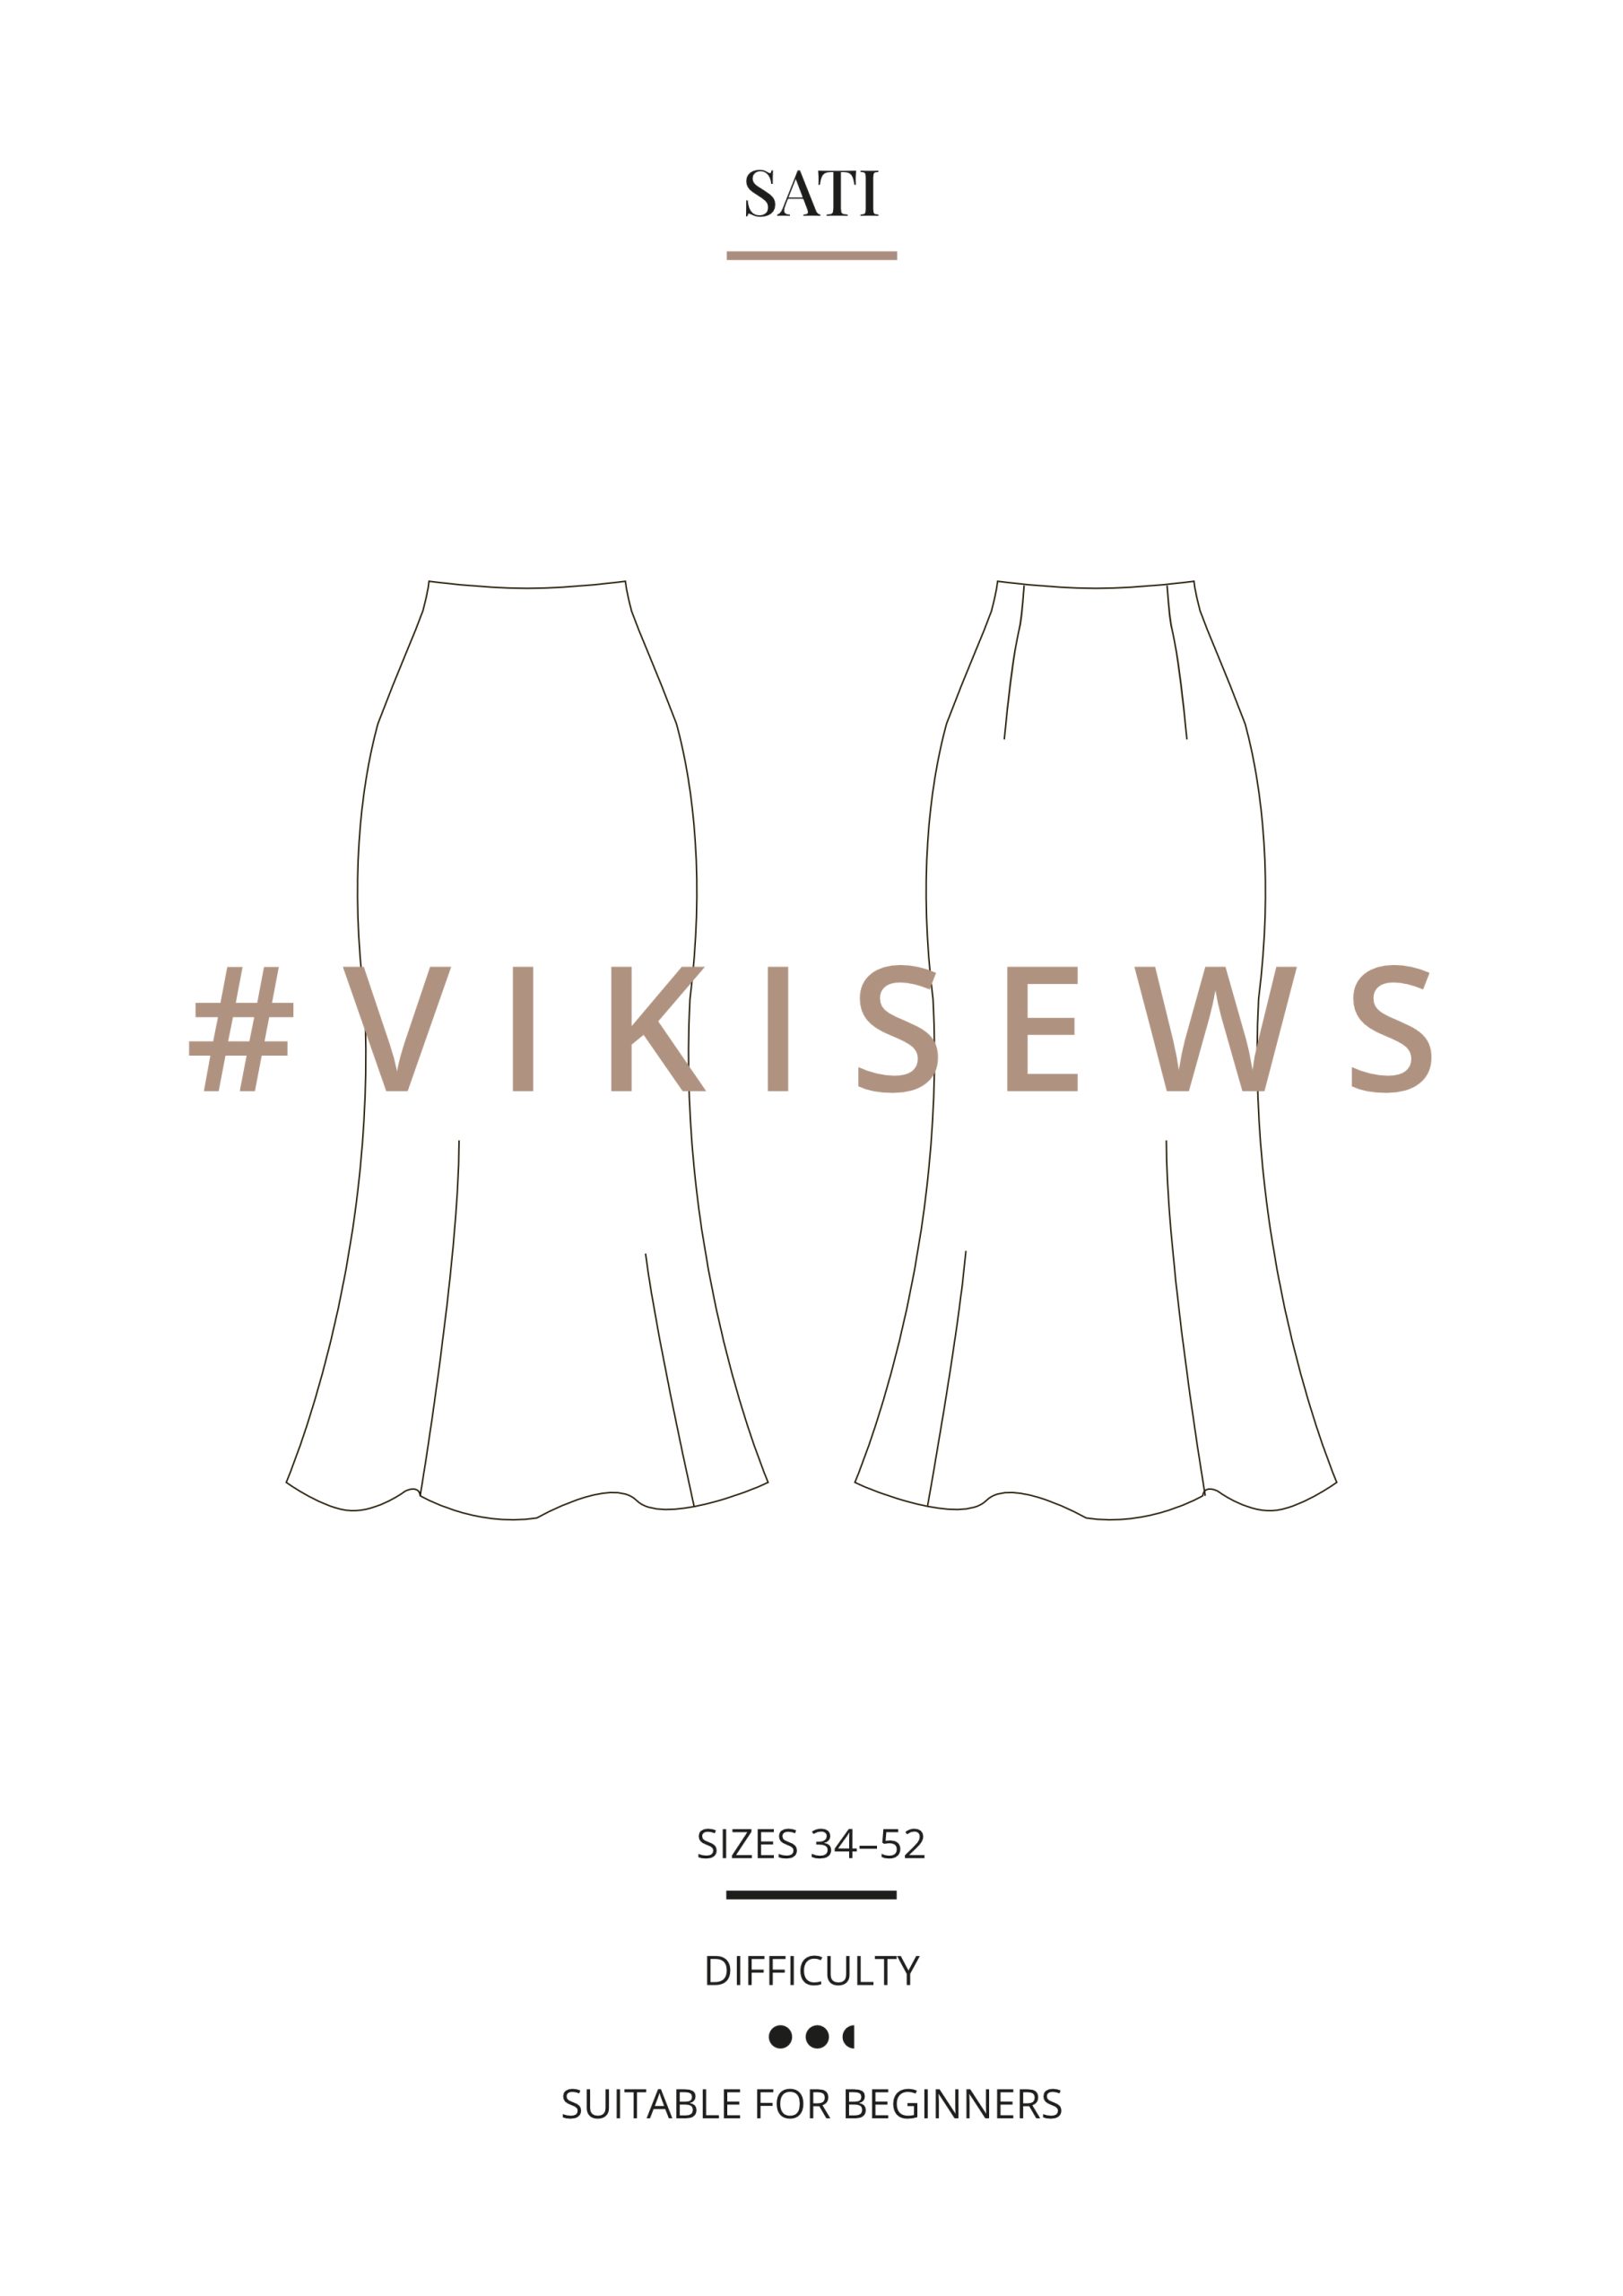 Vikisews Sati Skirt